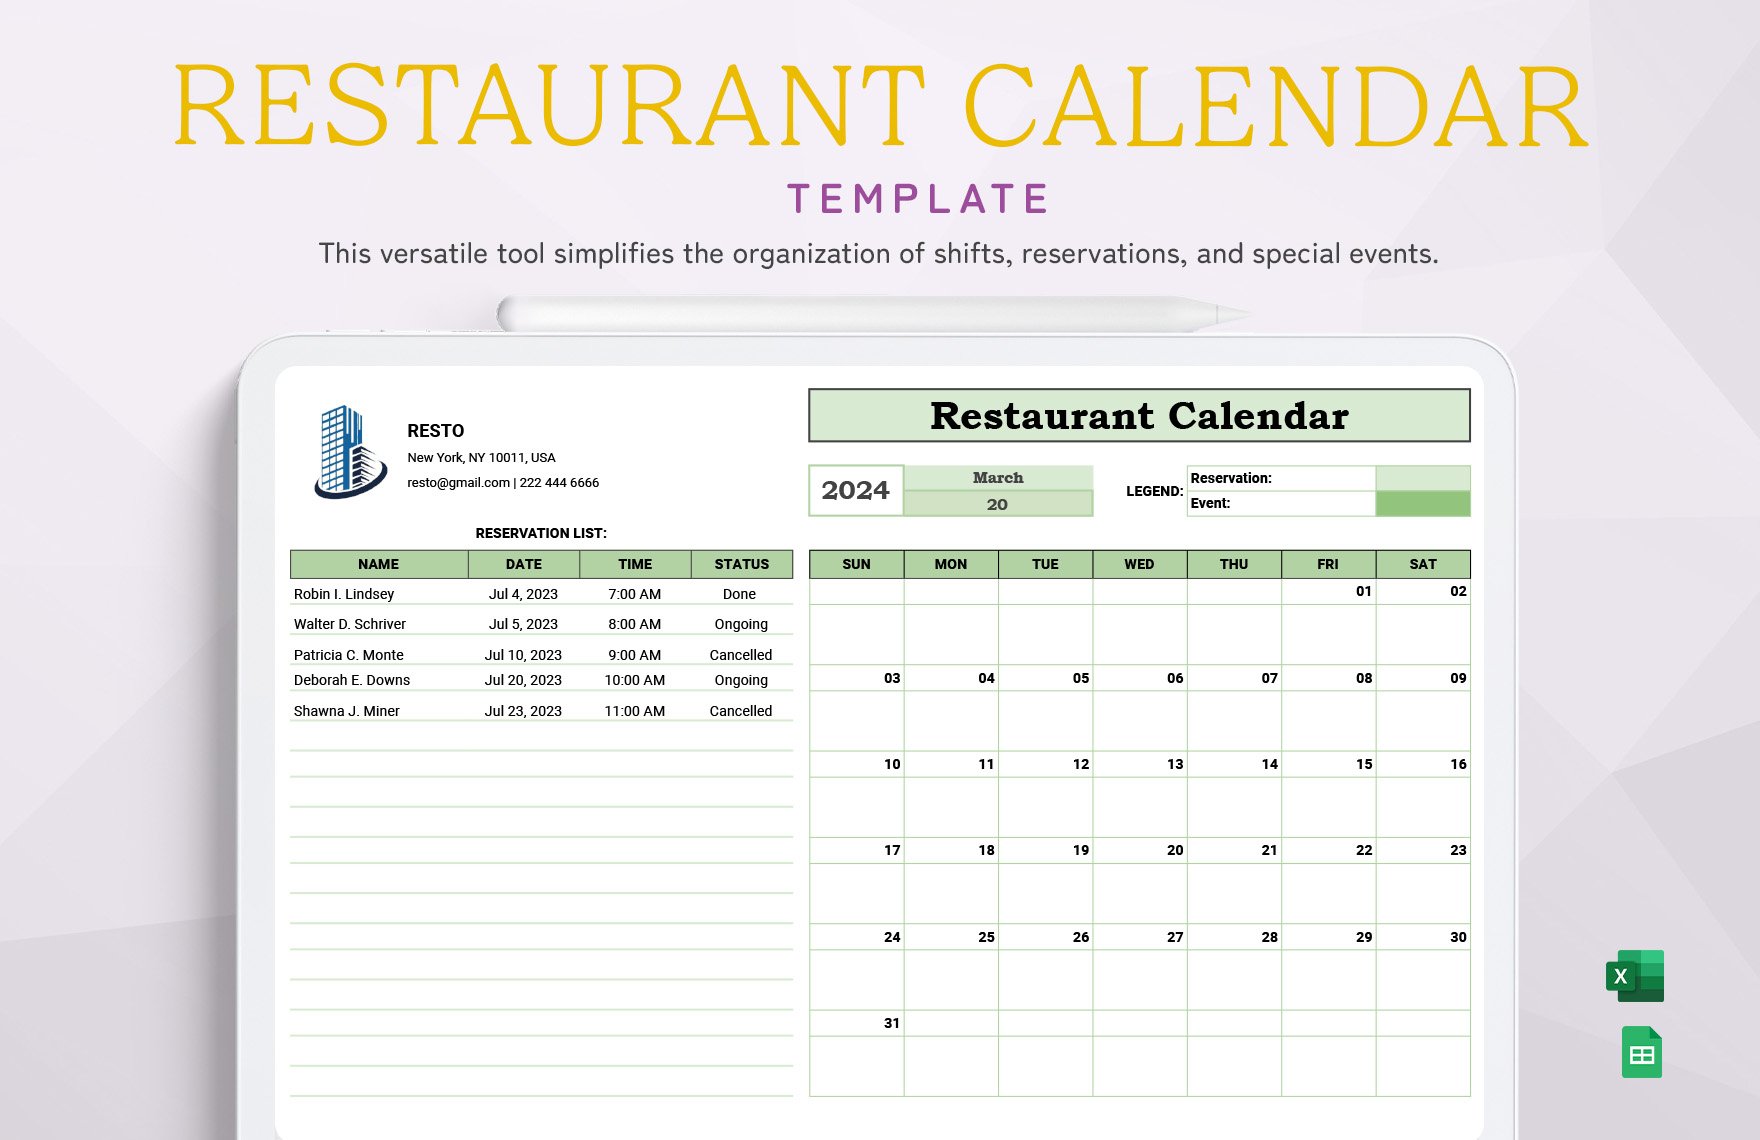 Restaurant Calendar Template in Excel, Google Sheets